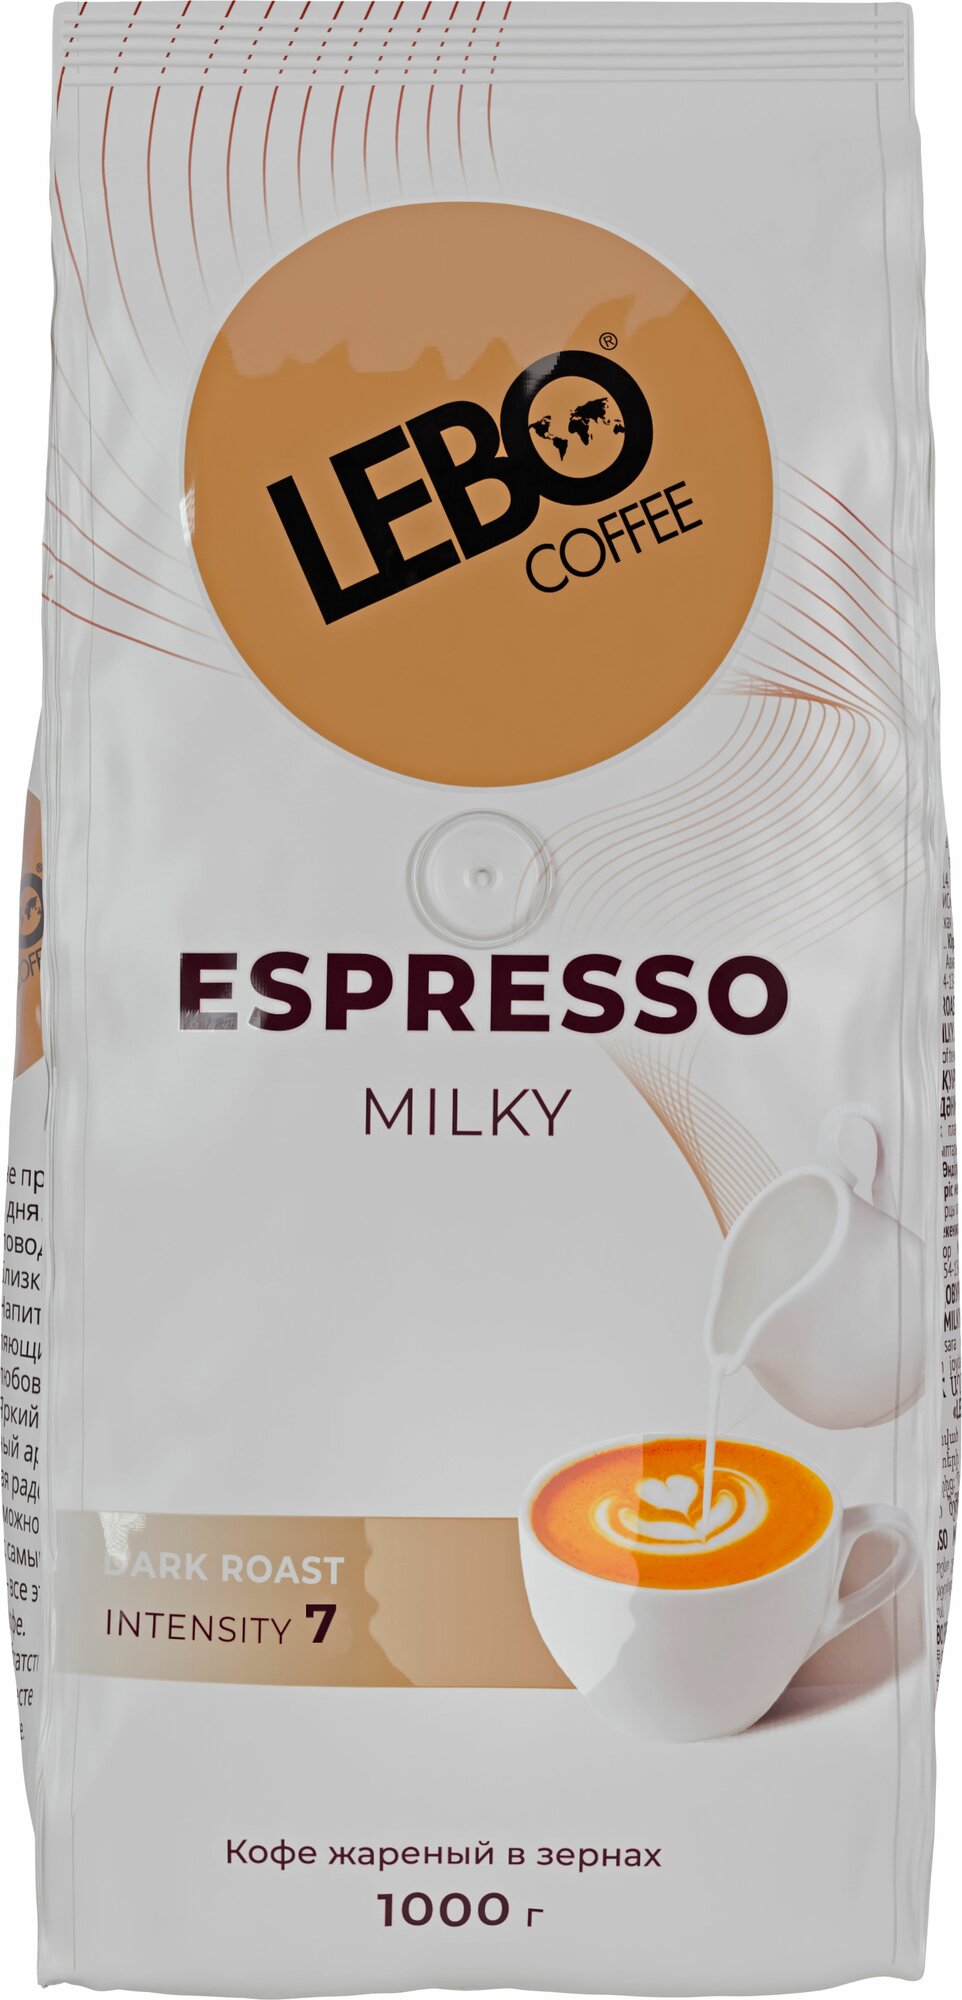 Кофе в зернах Lebo Espresso Milky, 1 кг - фото №11